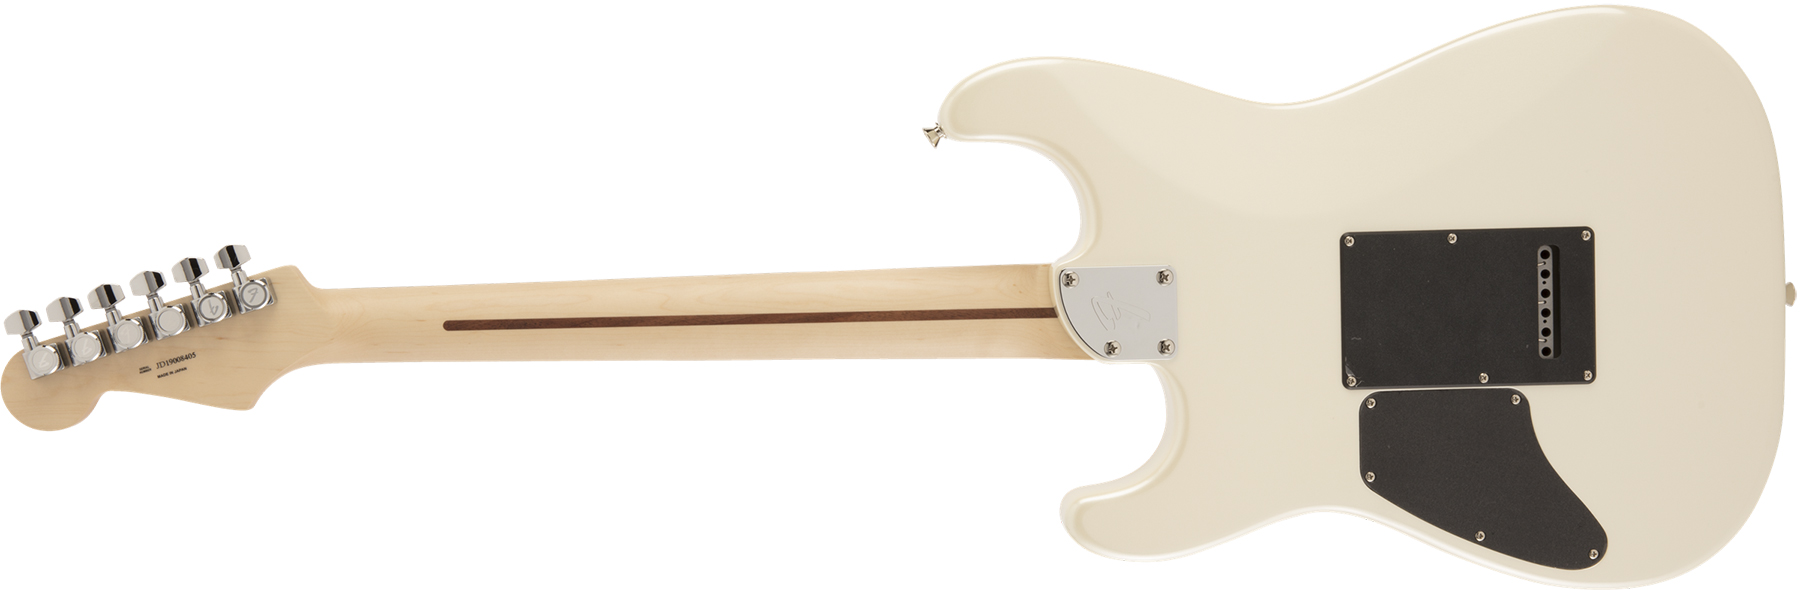 Fender Strat Modern Hh Japon Trem Rw - Olympic Pearl - Str shape electric guitar - Variation 1